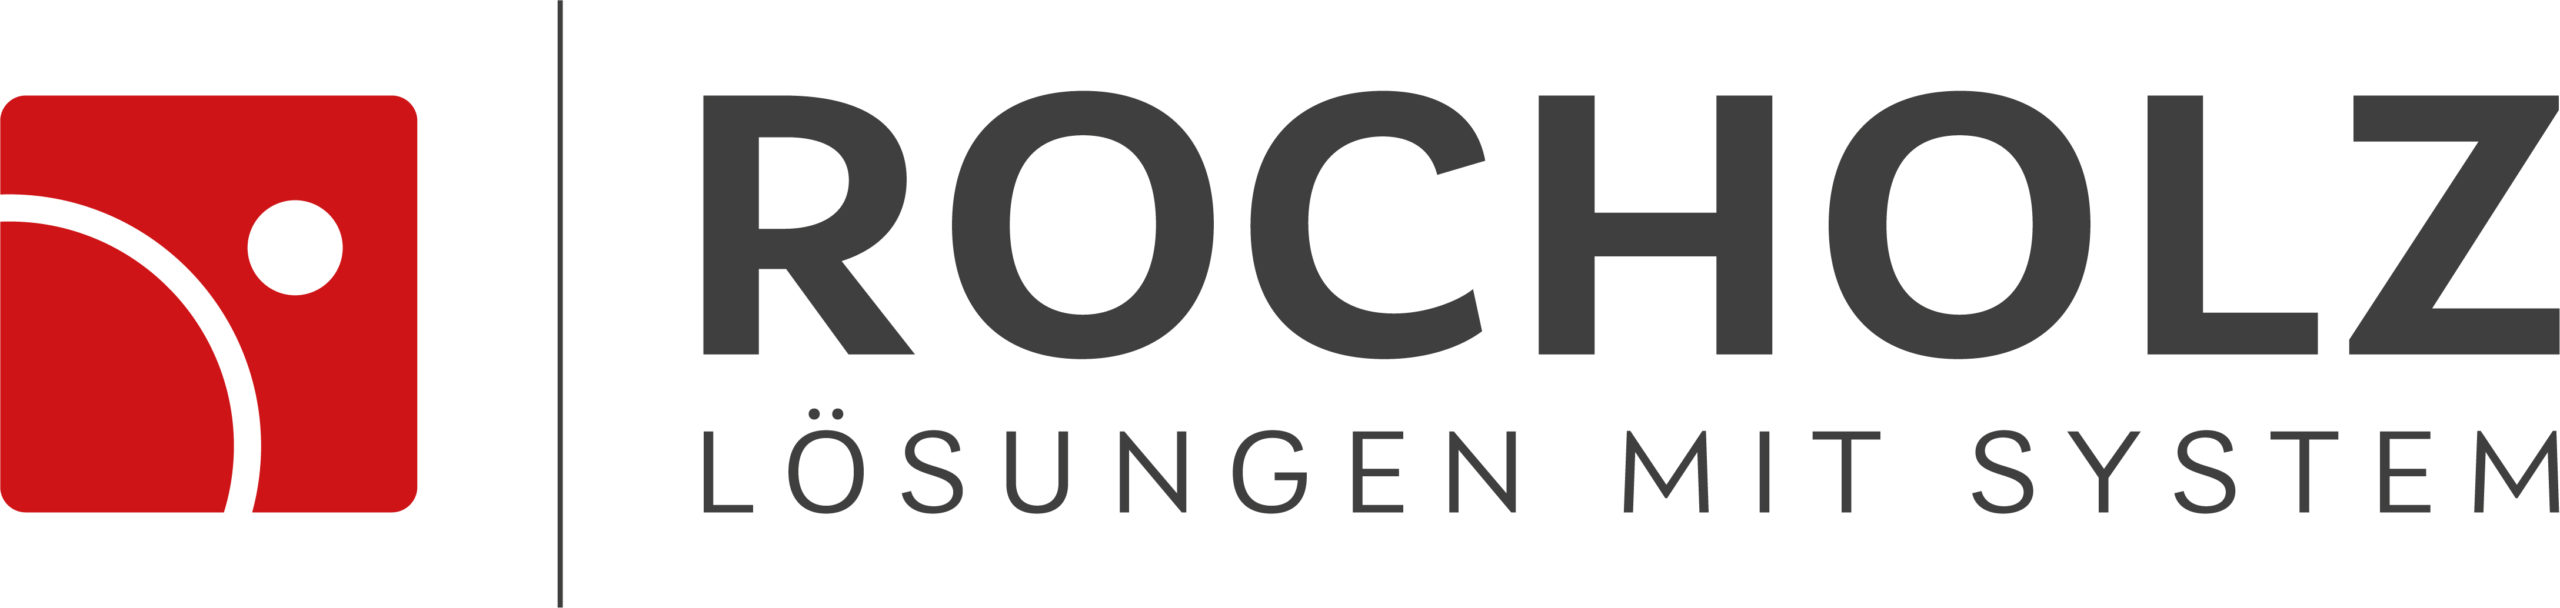 Rocholz GmbH